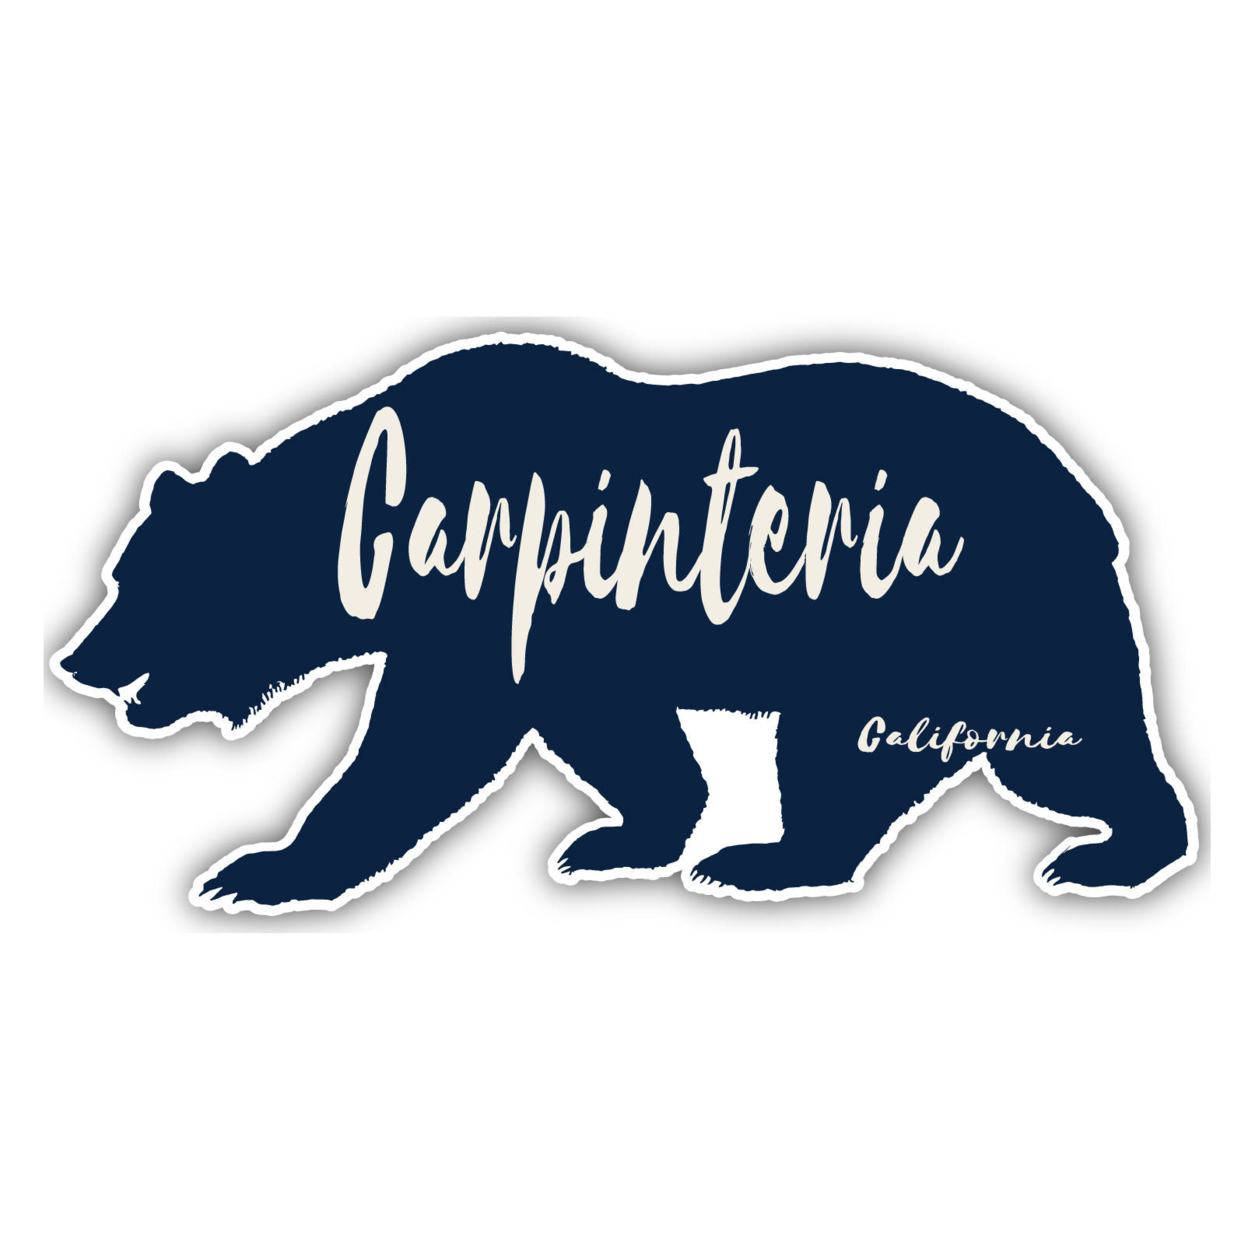 Carpinteria California Souvenir Decorative Stickers (Choose Theme And Size) - 4-Pack, 10-Inch, Camp Life